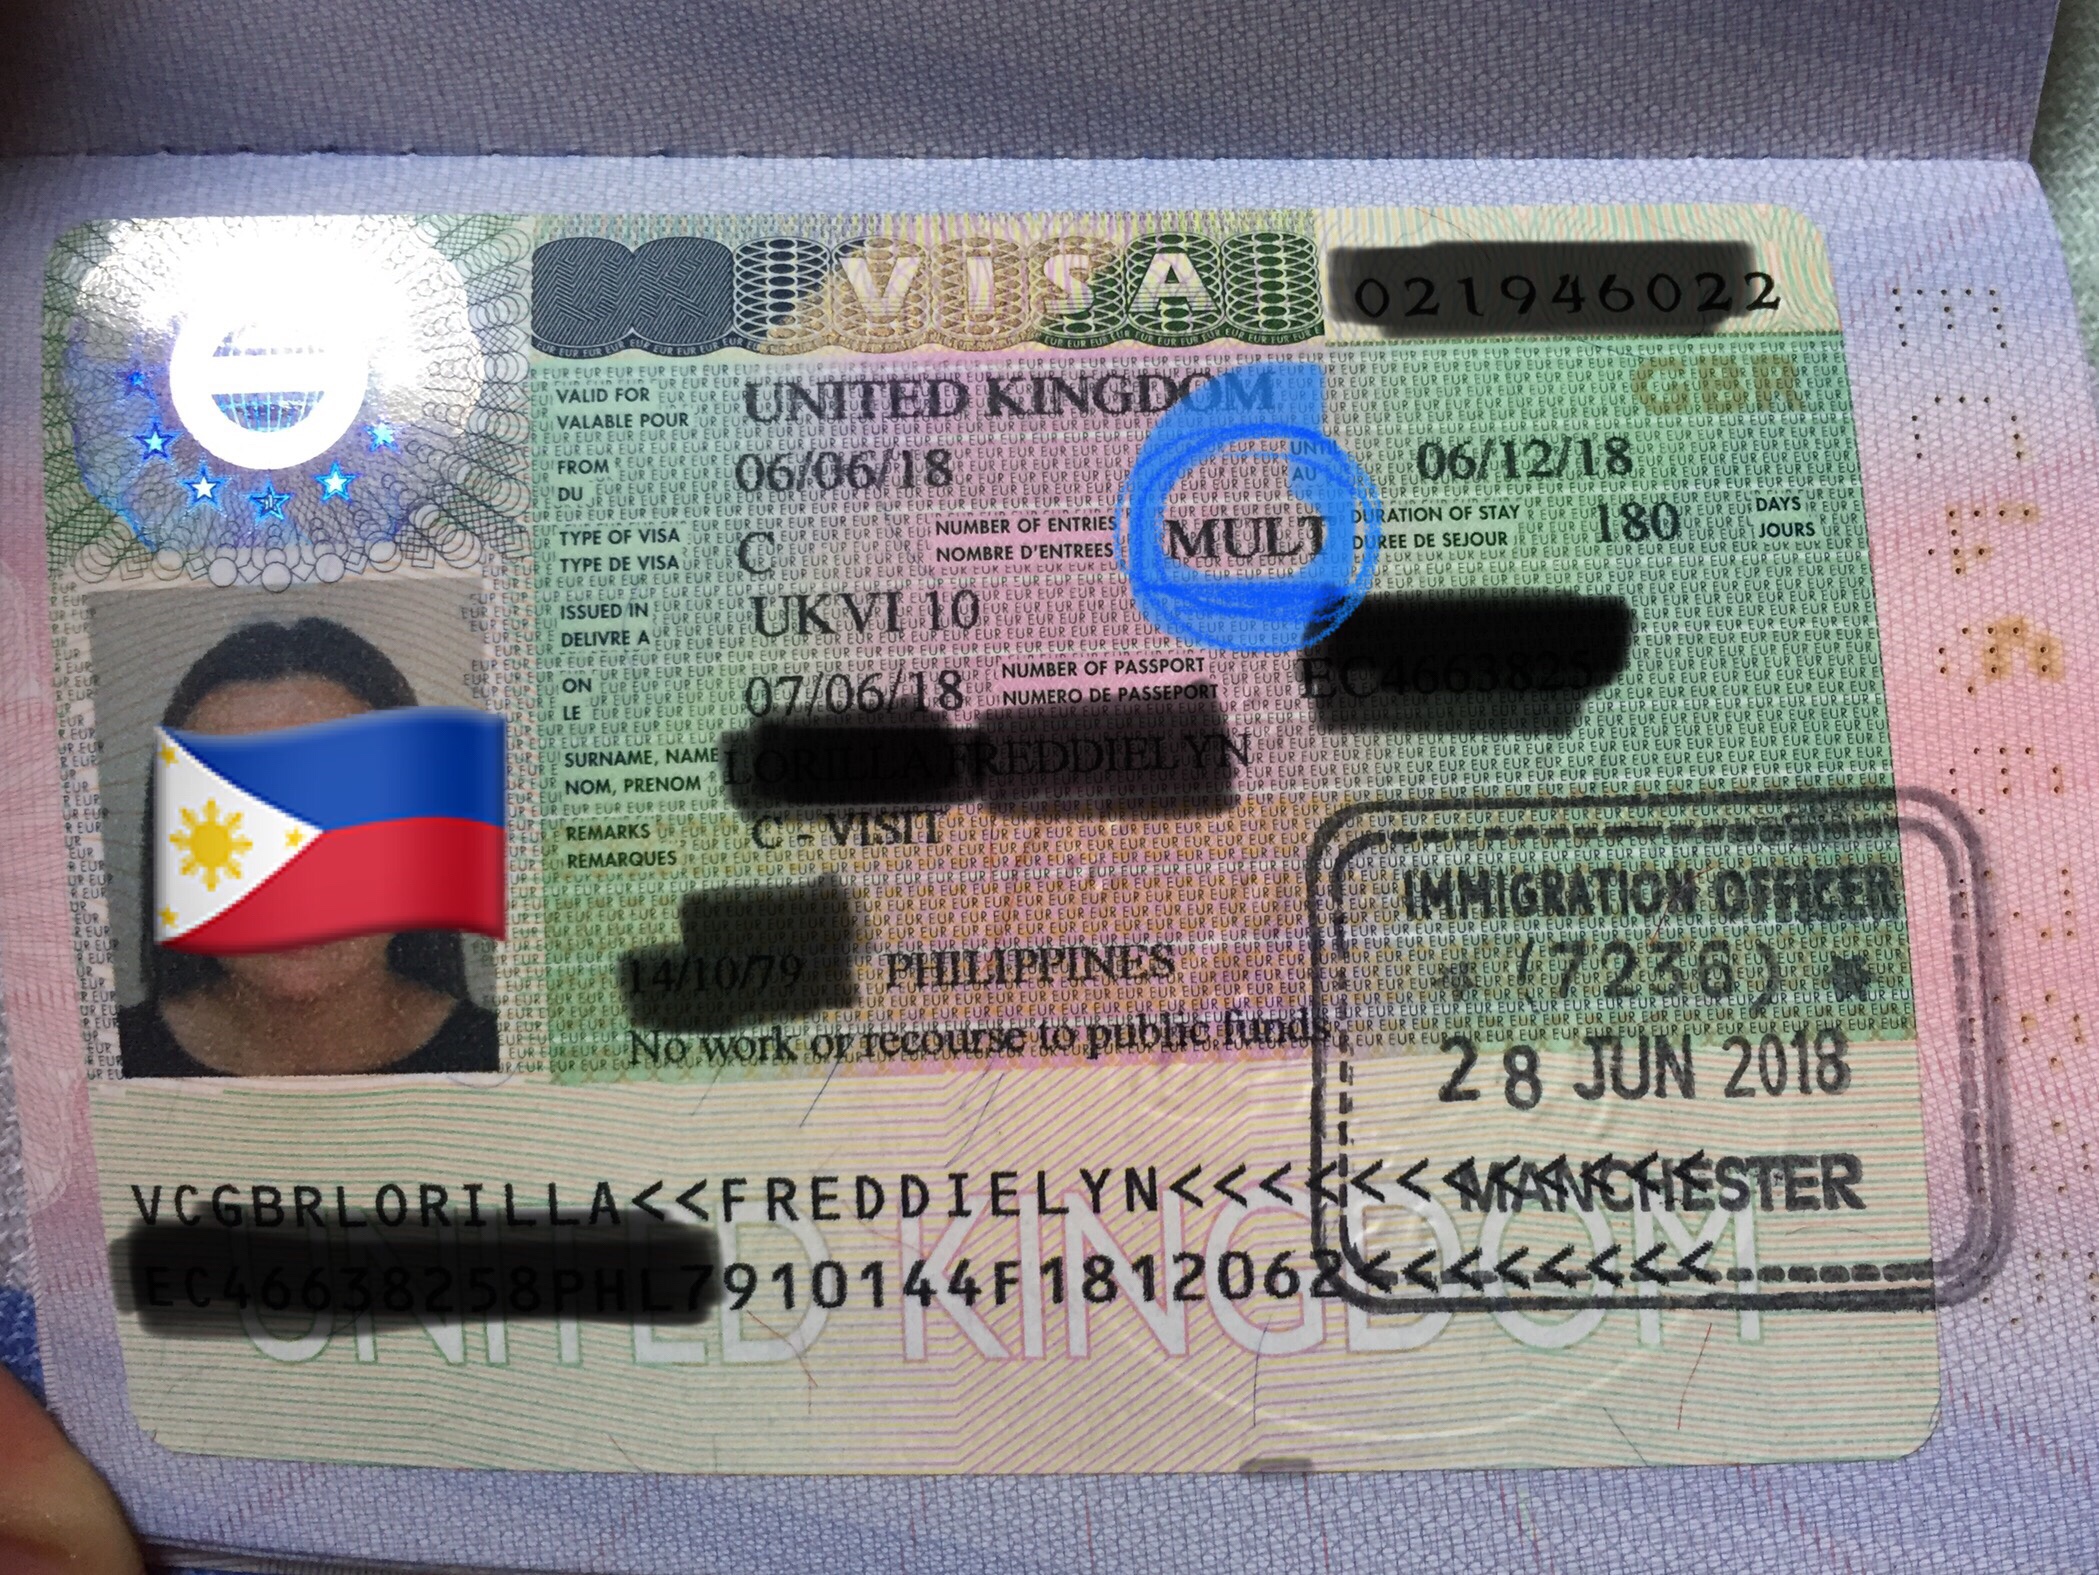 Entry visa